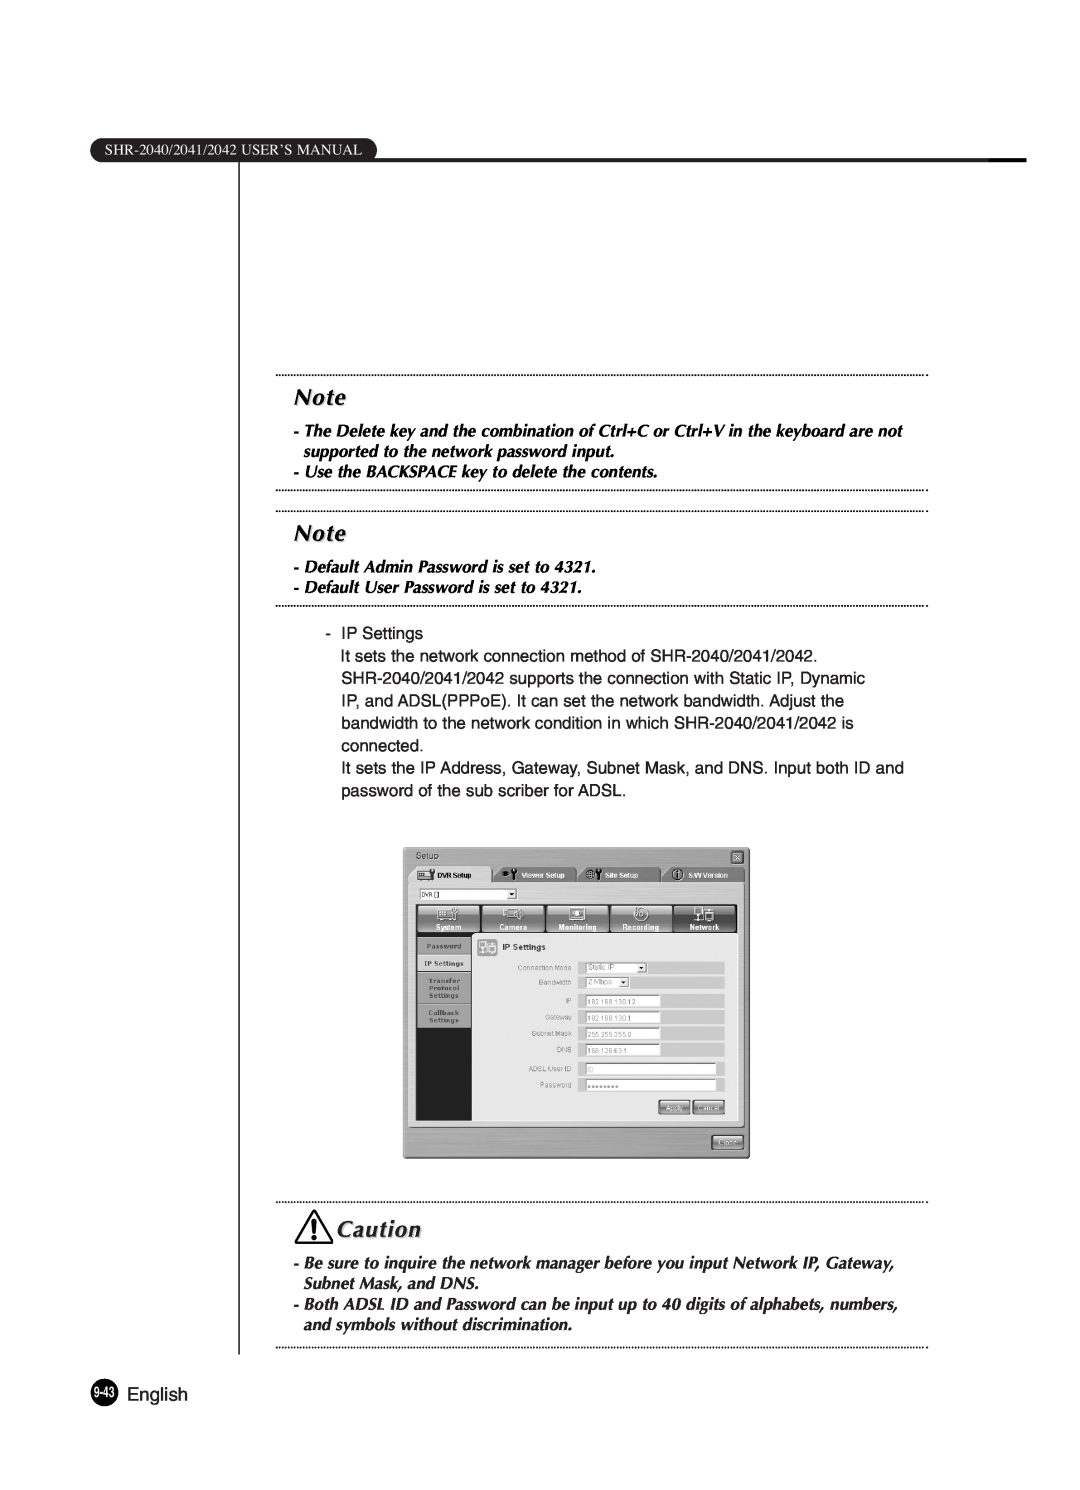 Samsung SHR-2042P250, SHR-2040P250 manual English 